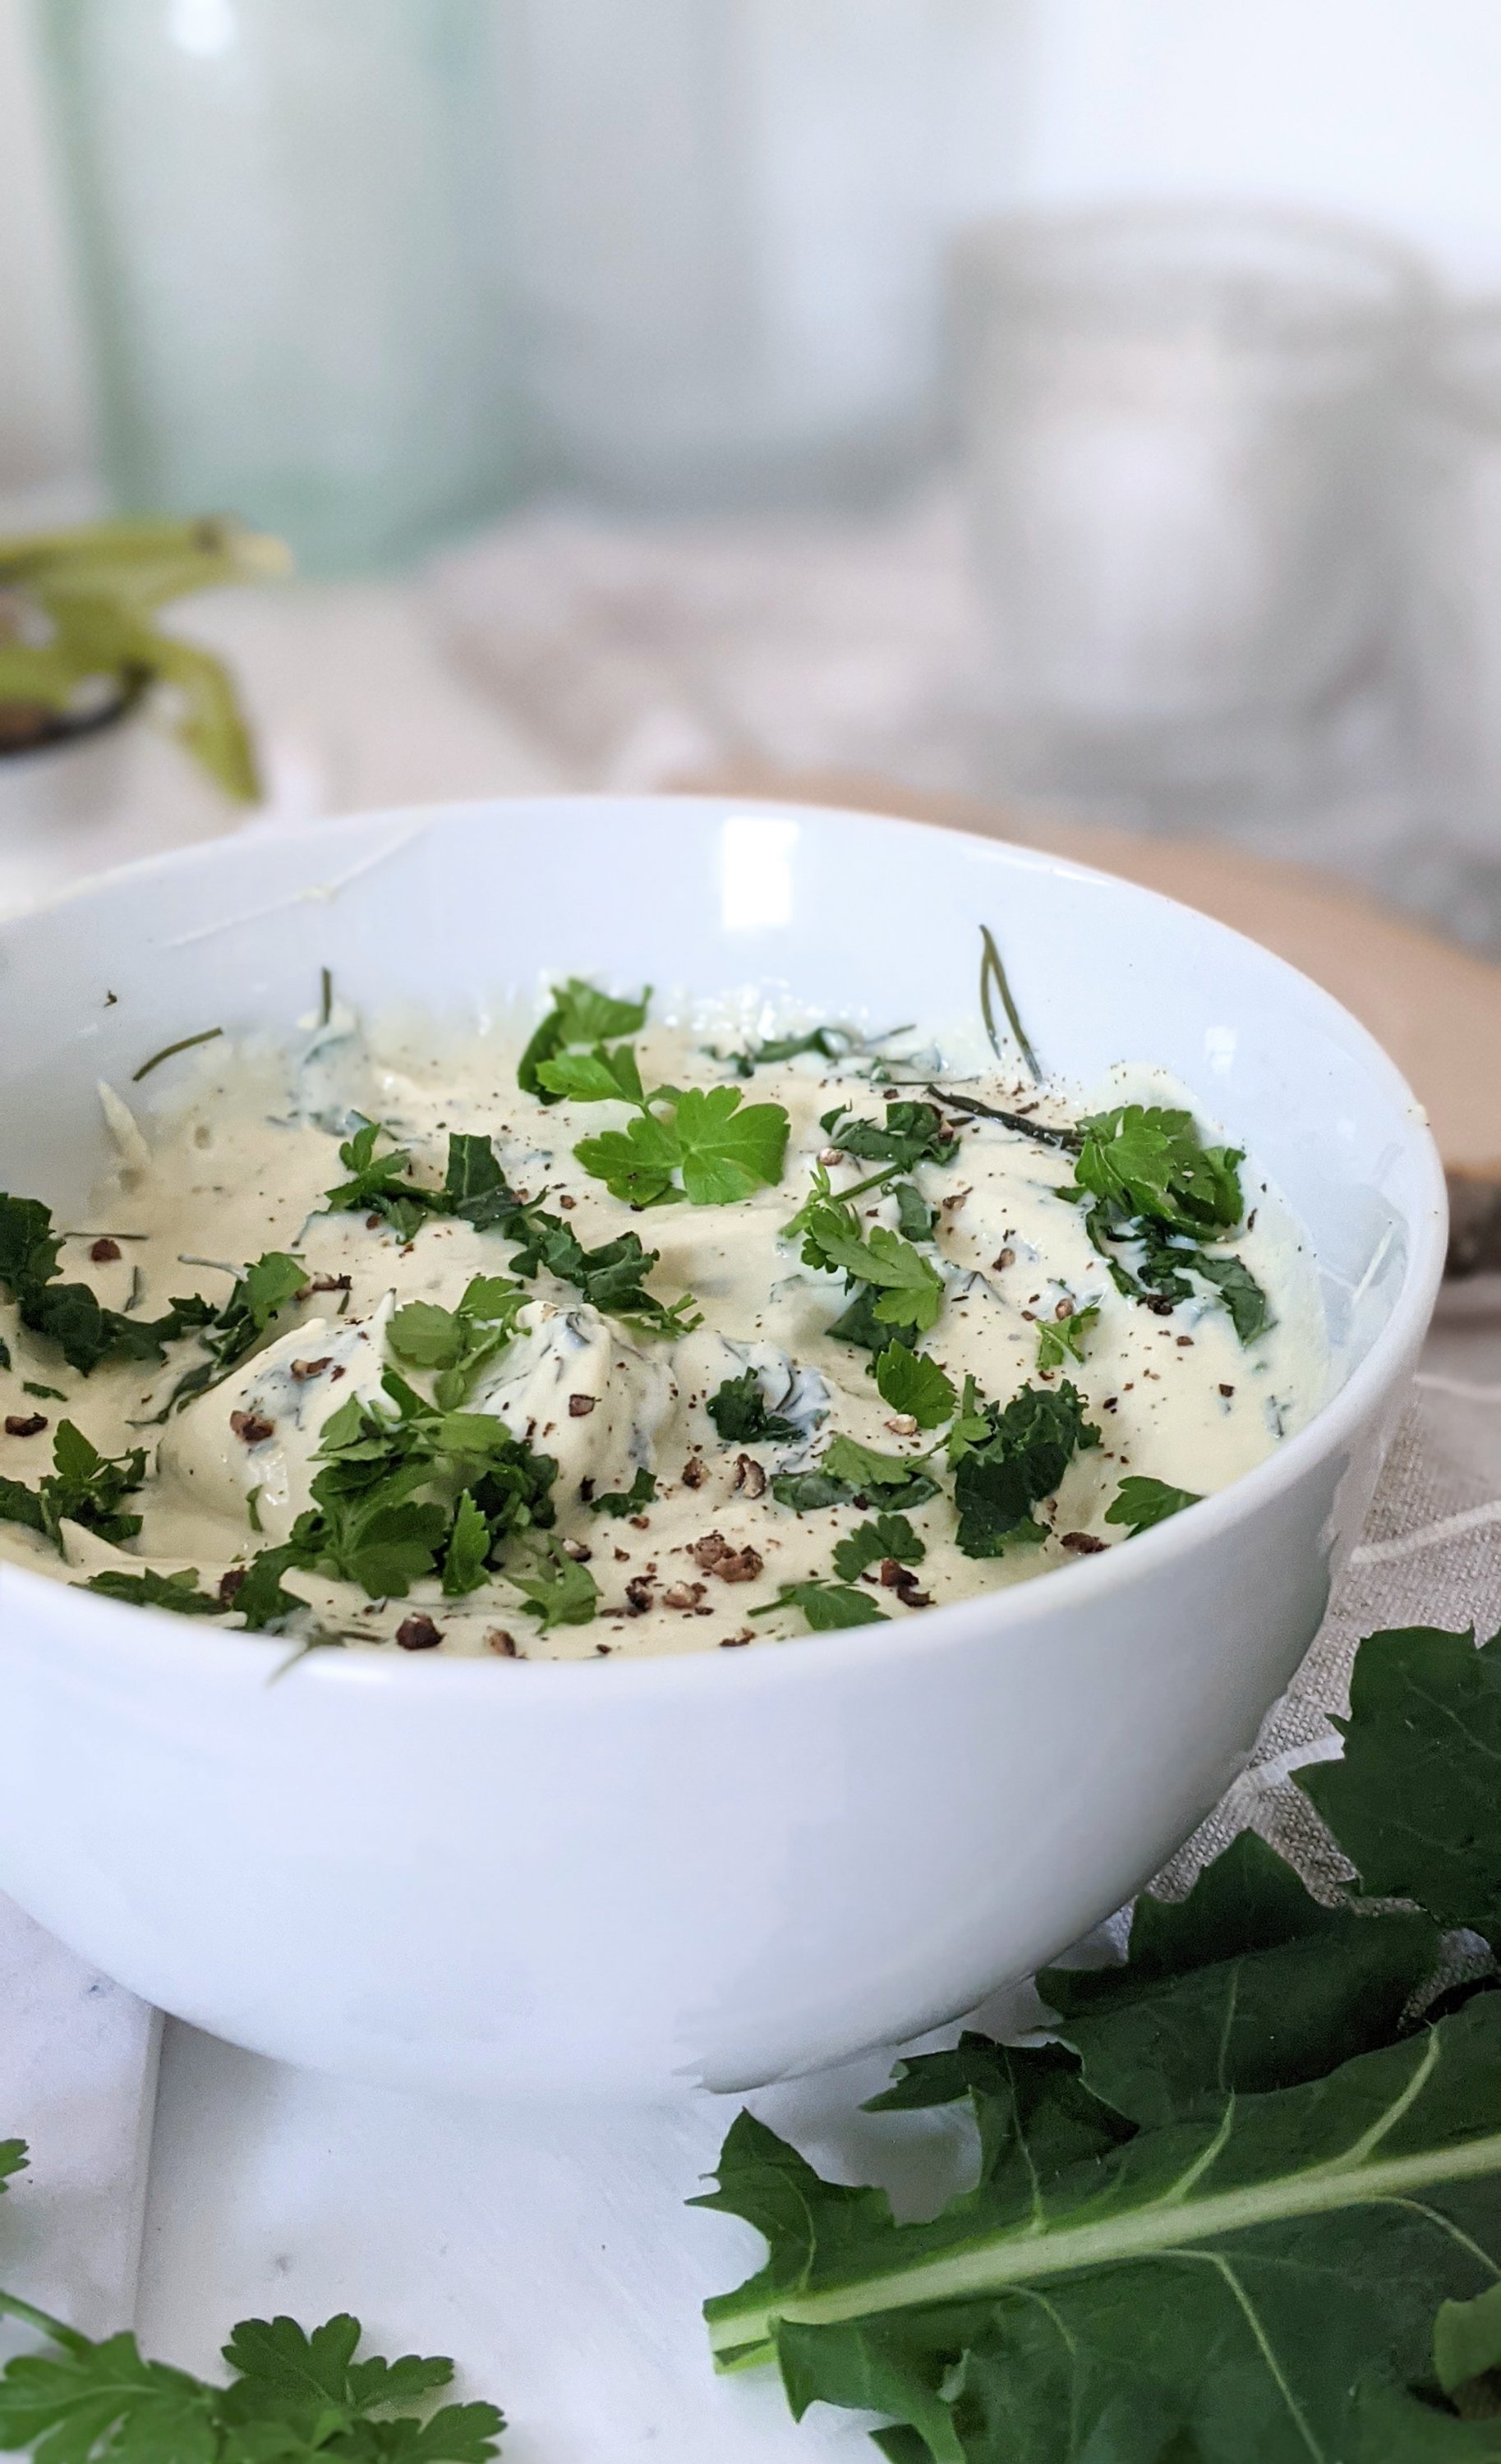 vegetable tzatziki no cucumber recipe with kale healthy dairy free greek yogurt dip sauce for veggies